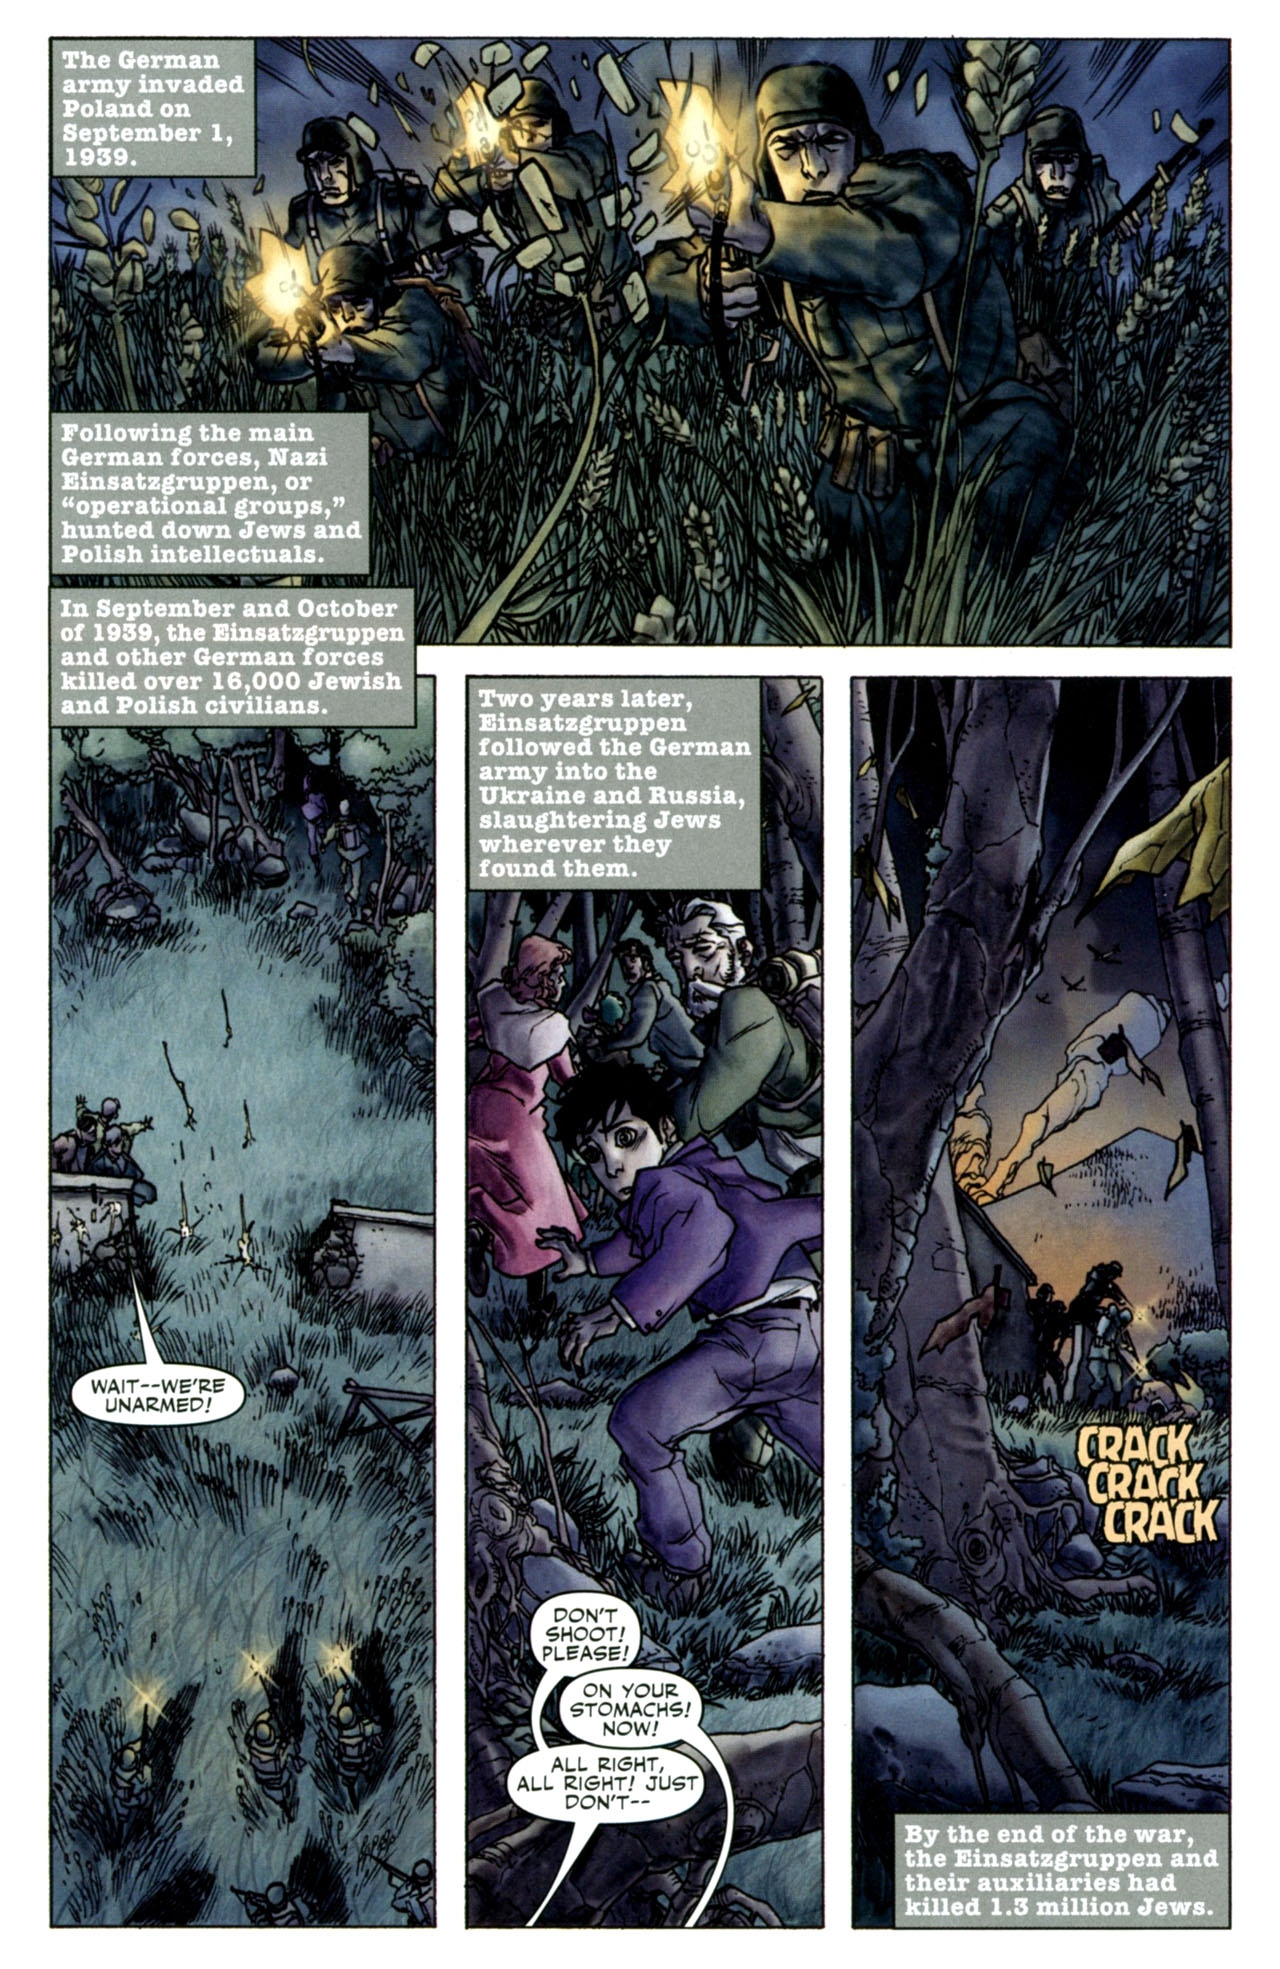 X-Men: Magneto Testament #3 - Part 3 of 5 